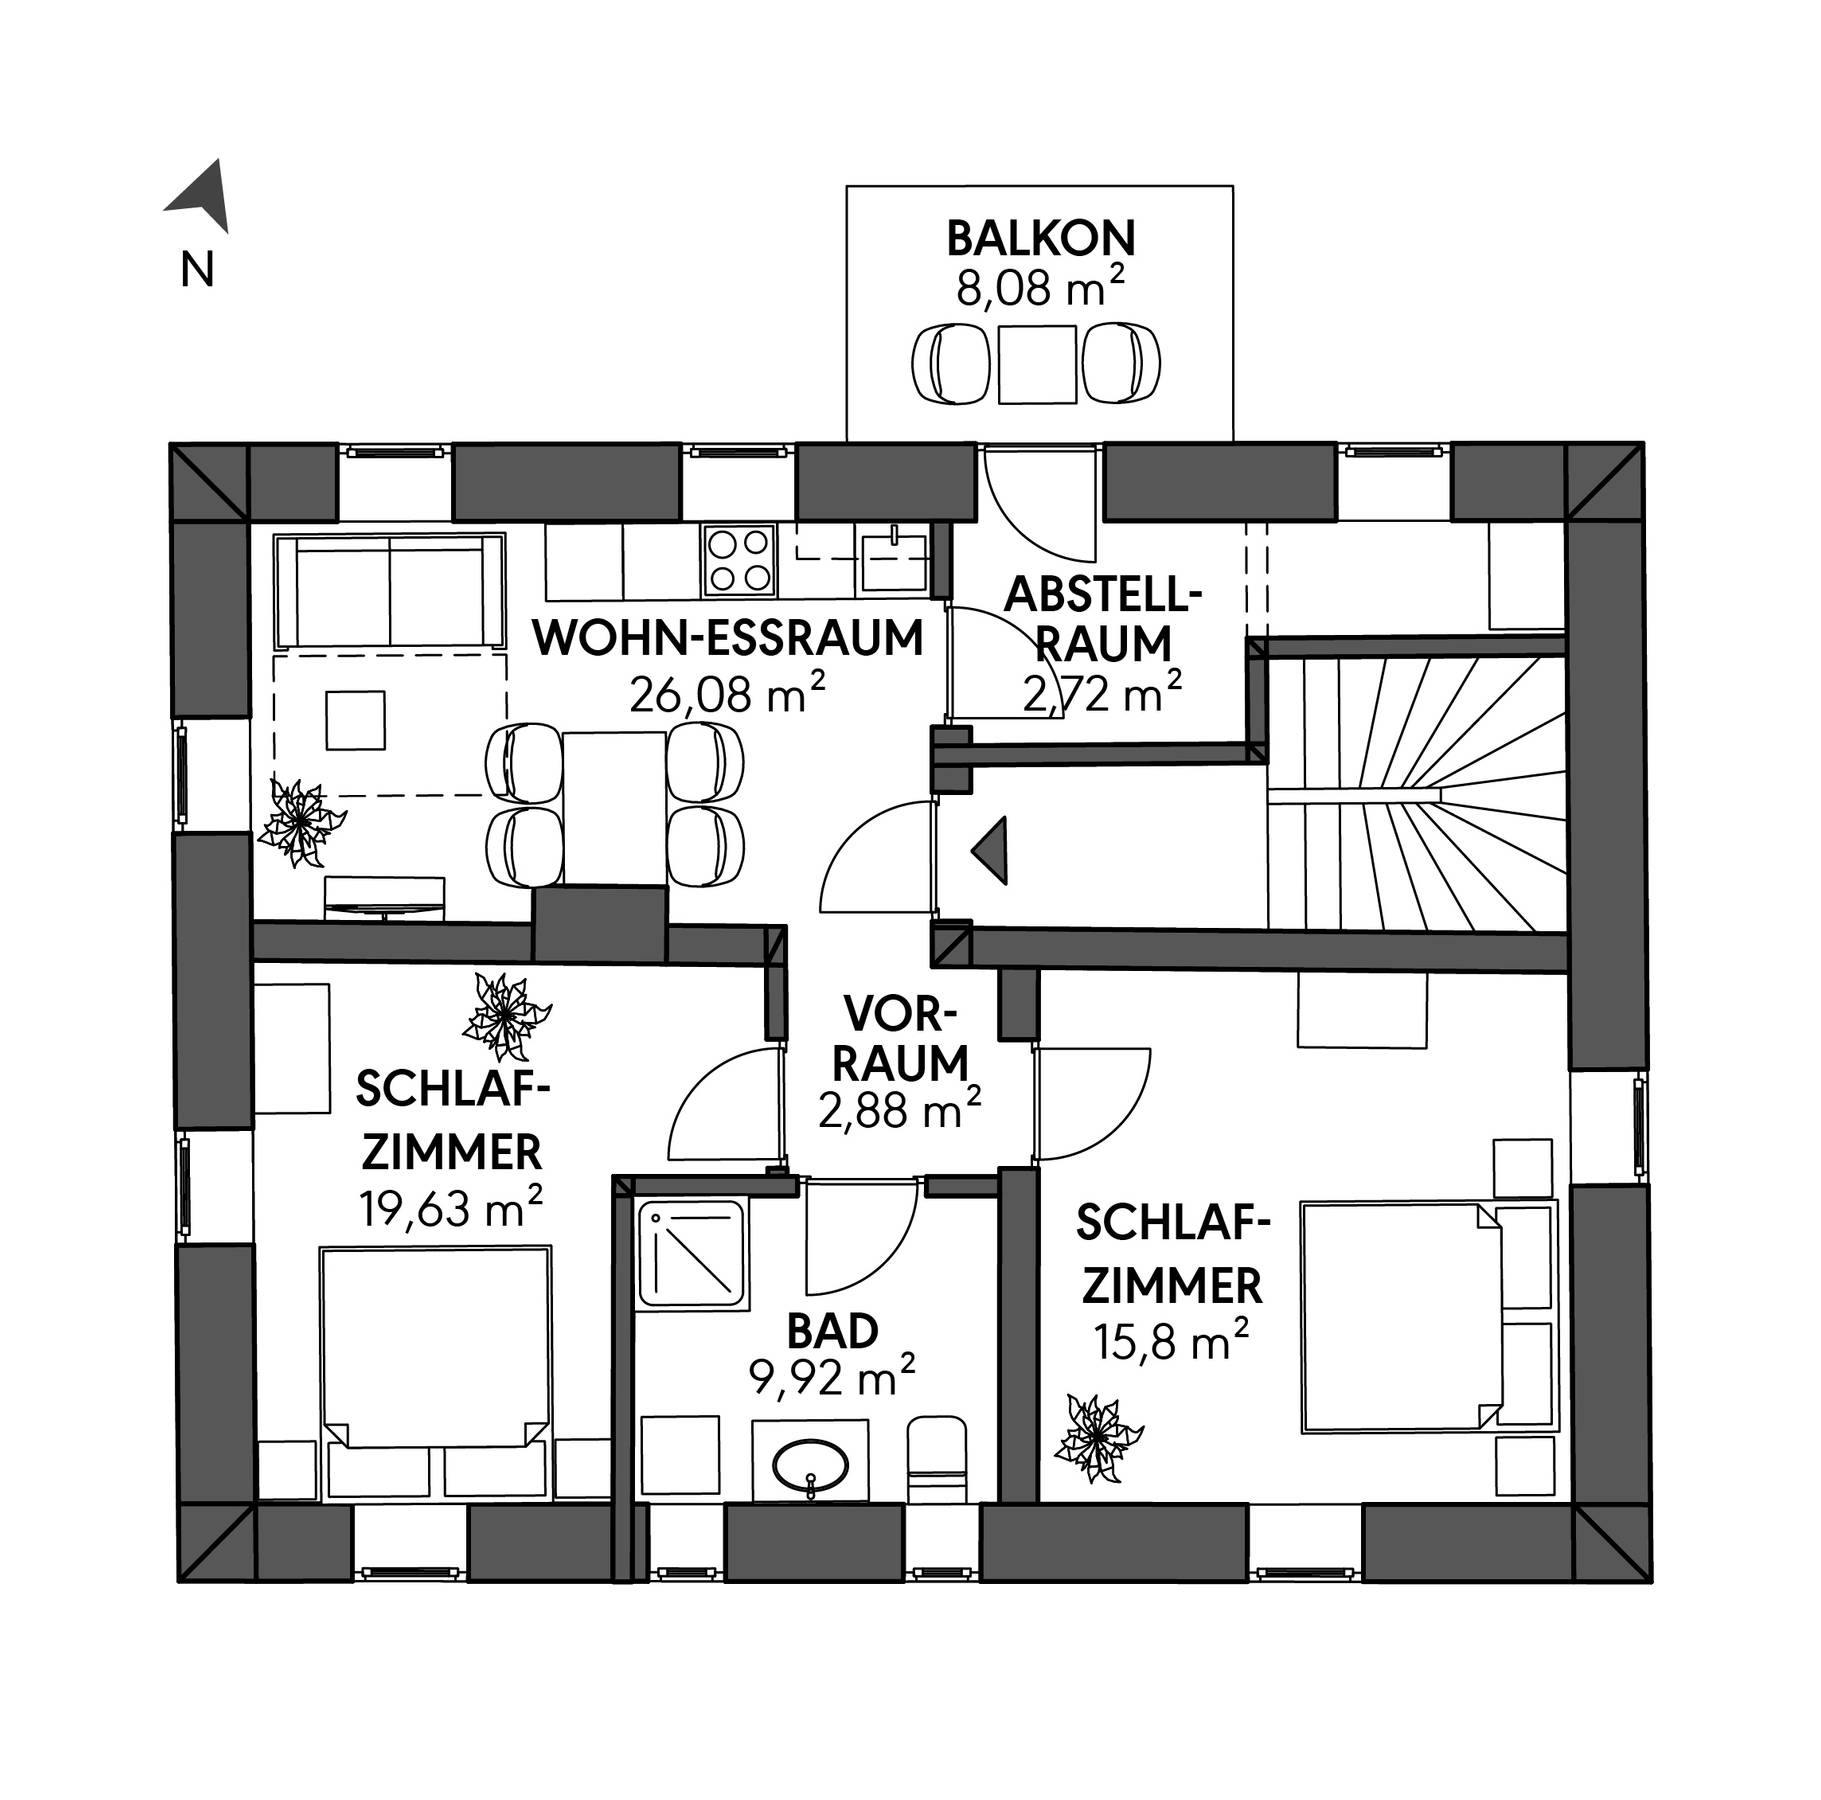 DAREBELL apartment - Image 22